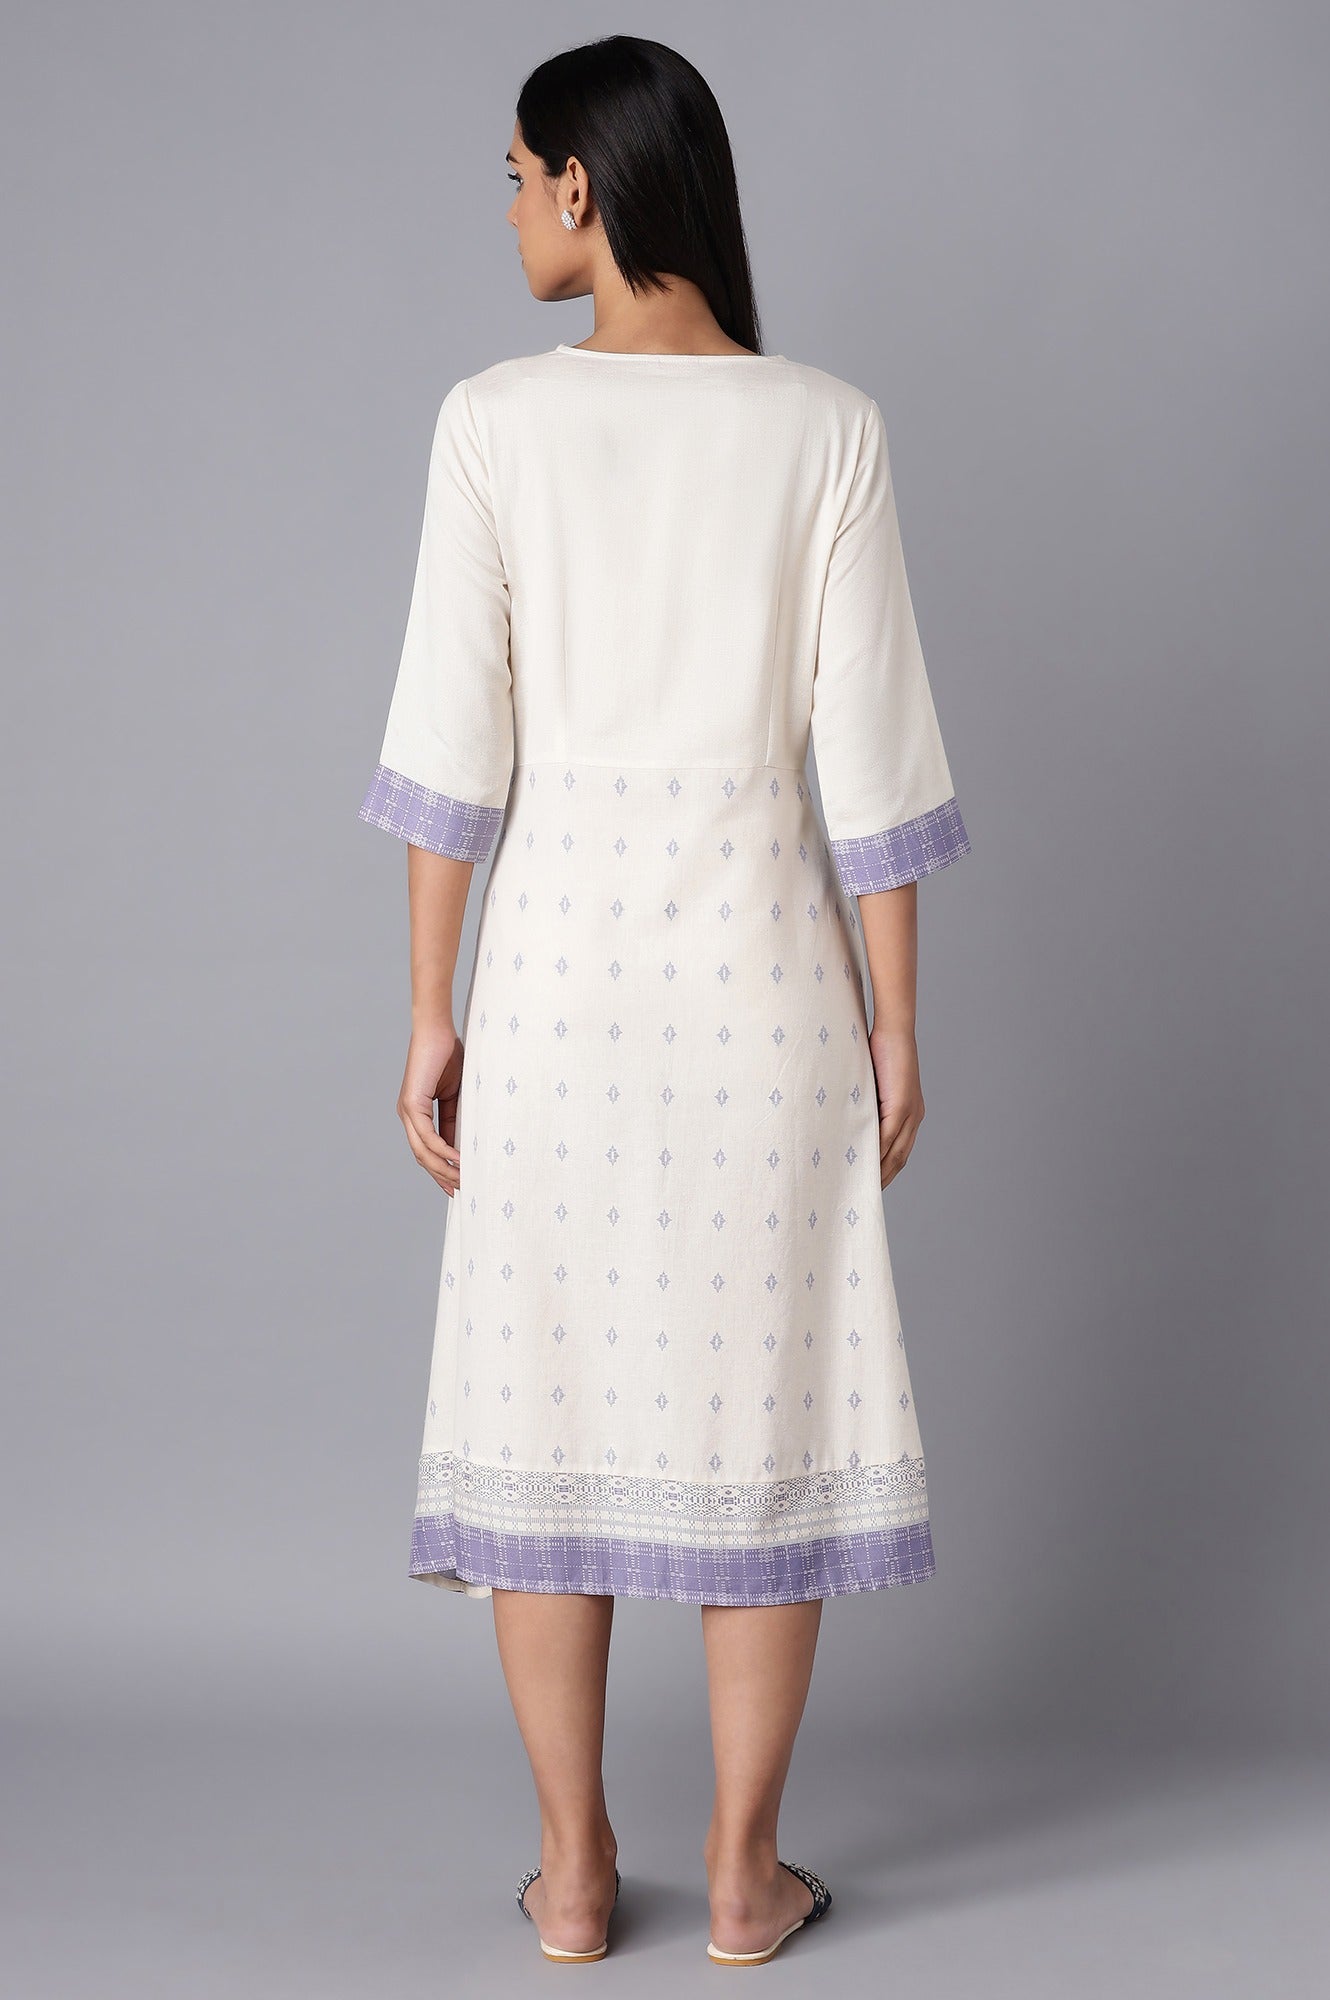 New Pristine White A-line Dress